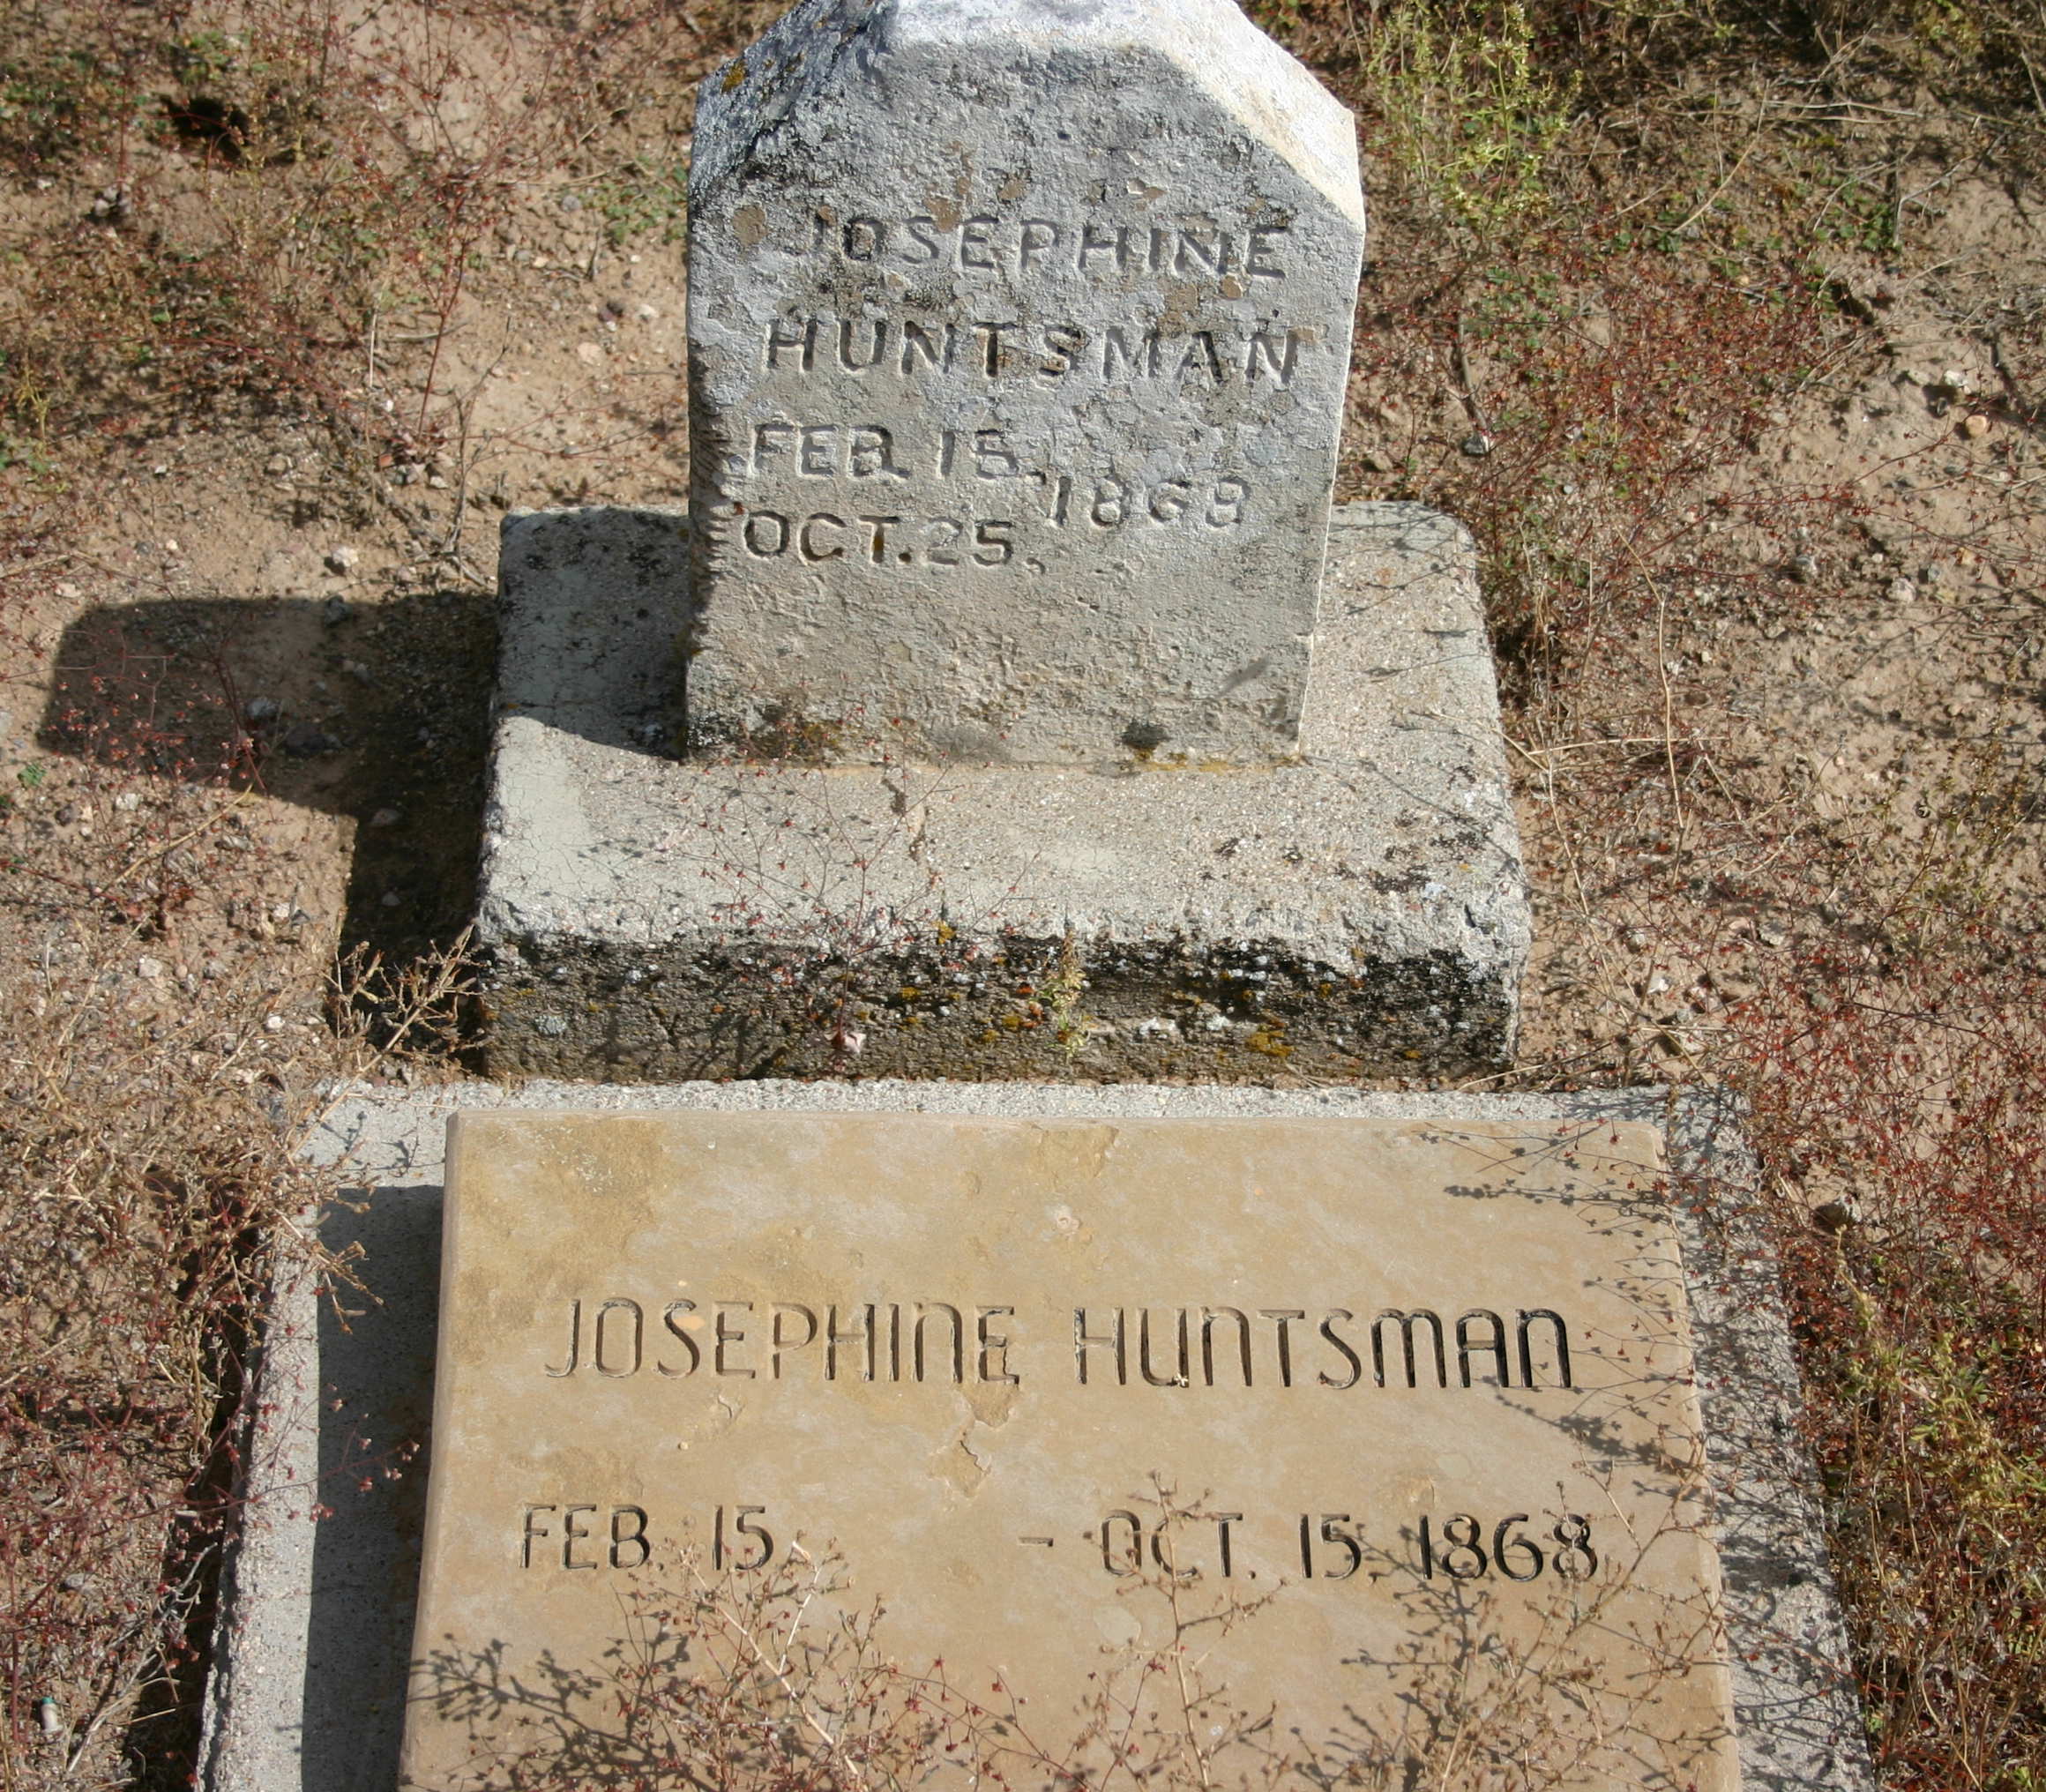 Josephine Huntsman gravestone at the Hebron Cemetery